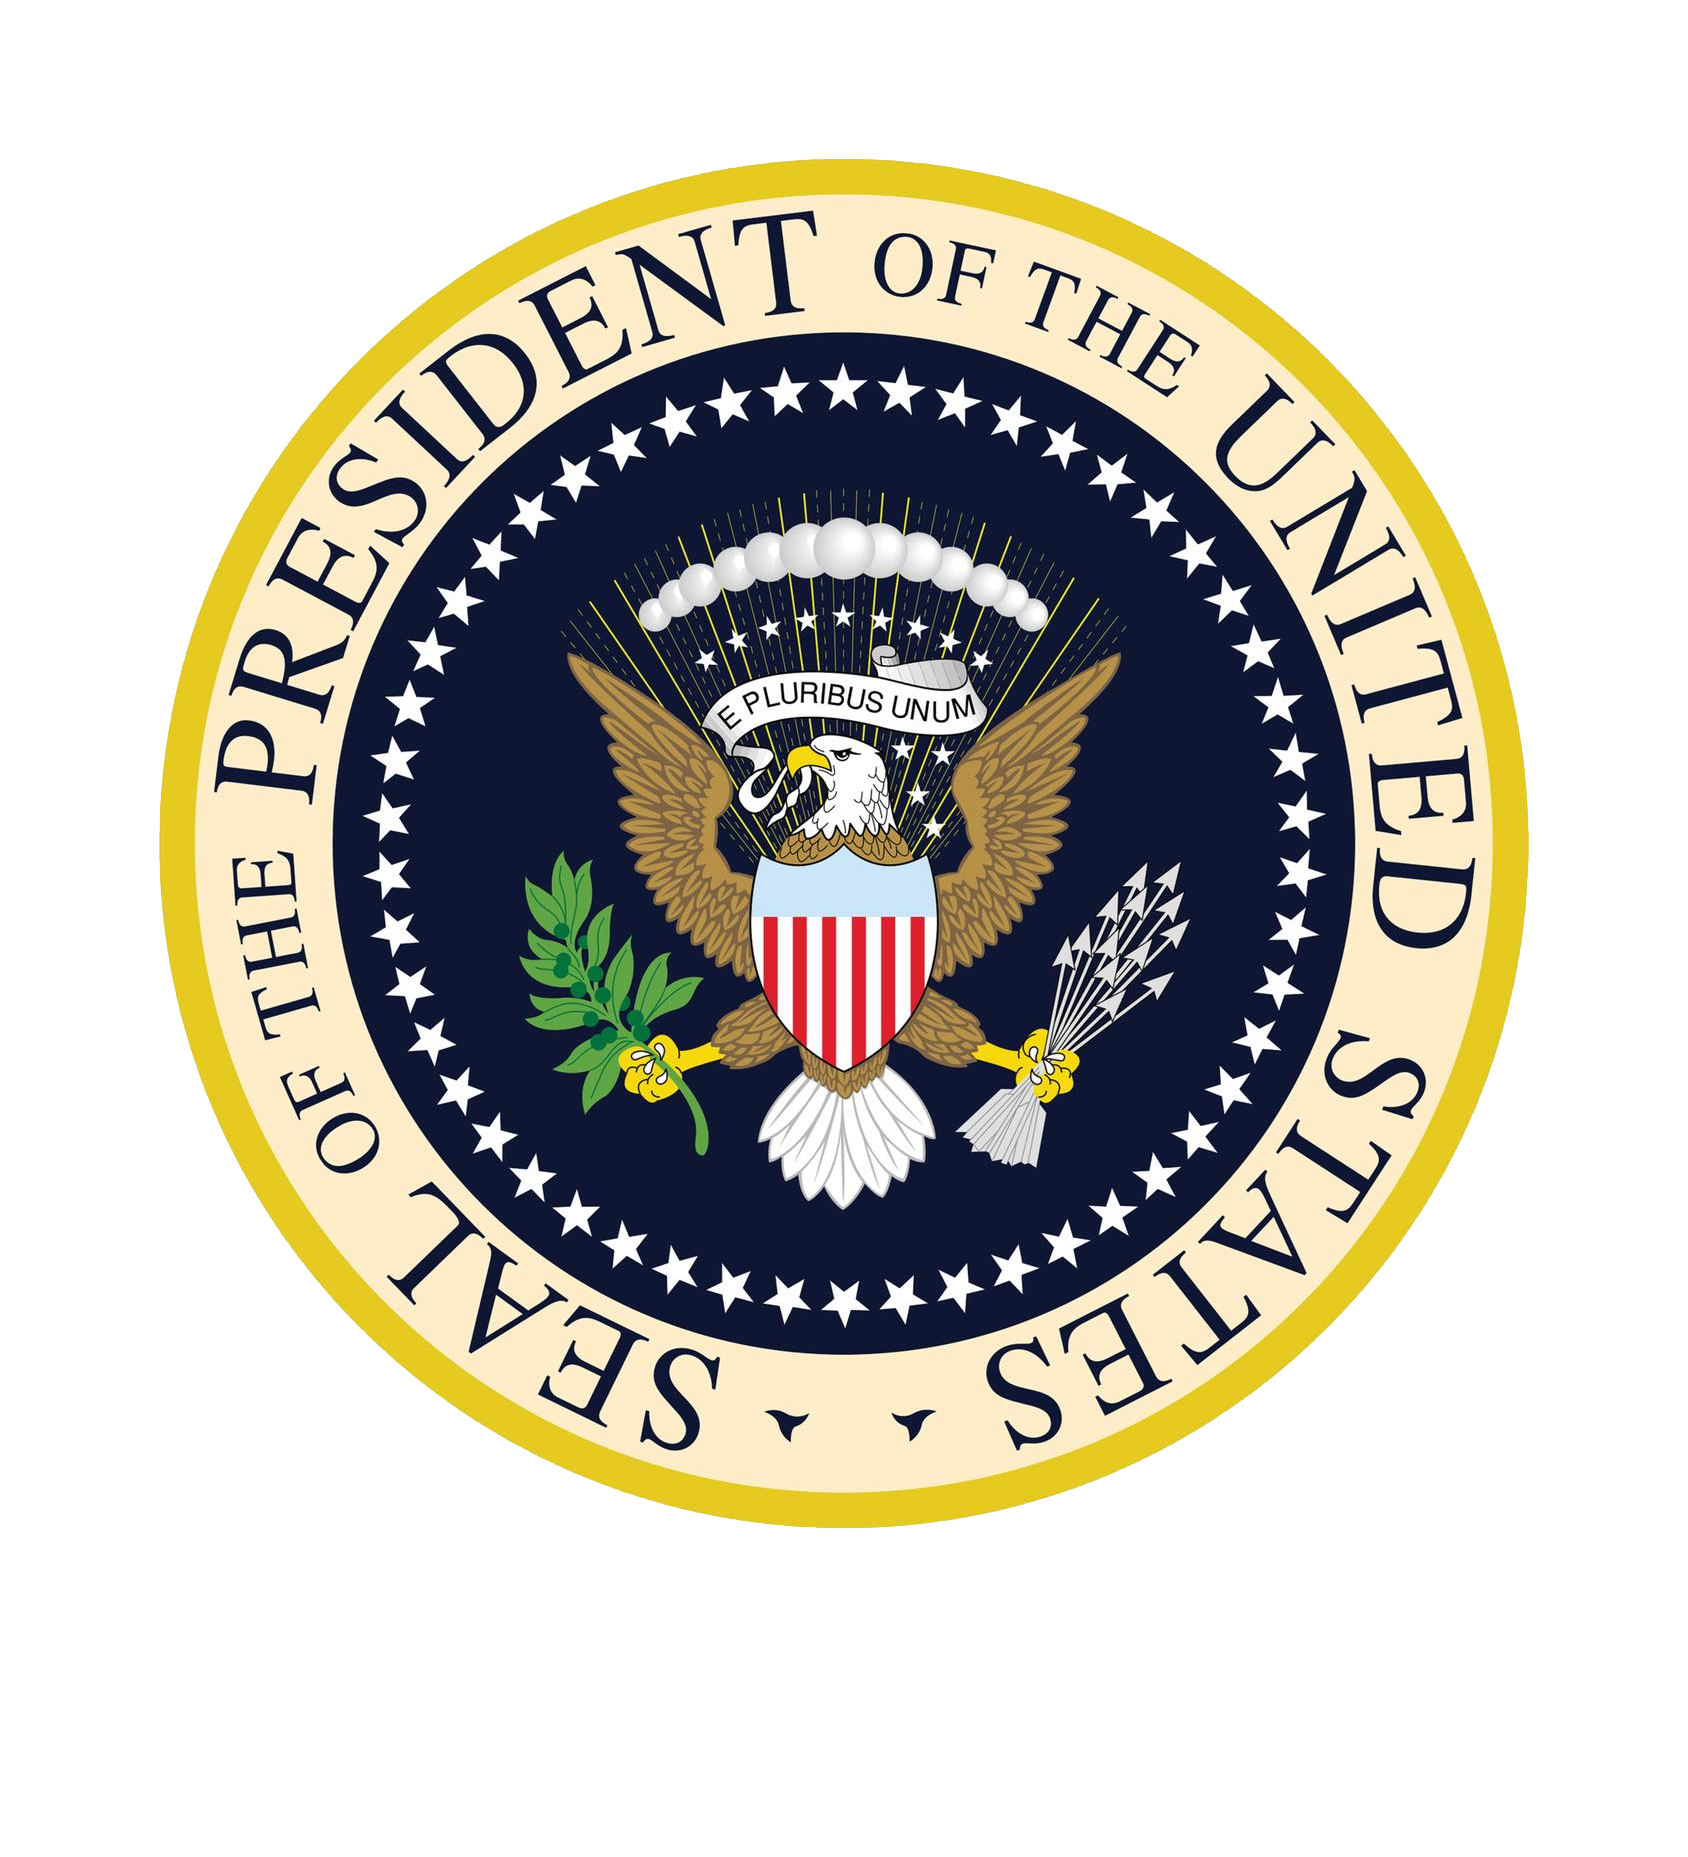 air force one detailing team badge